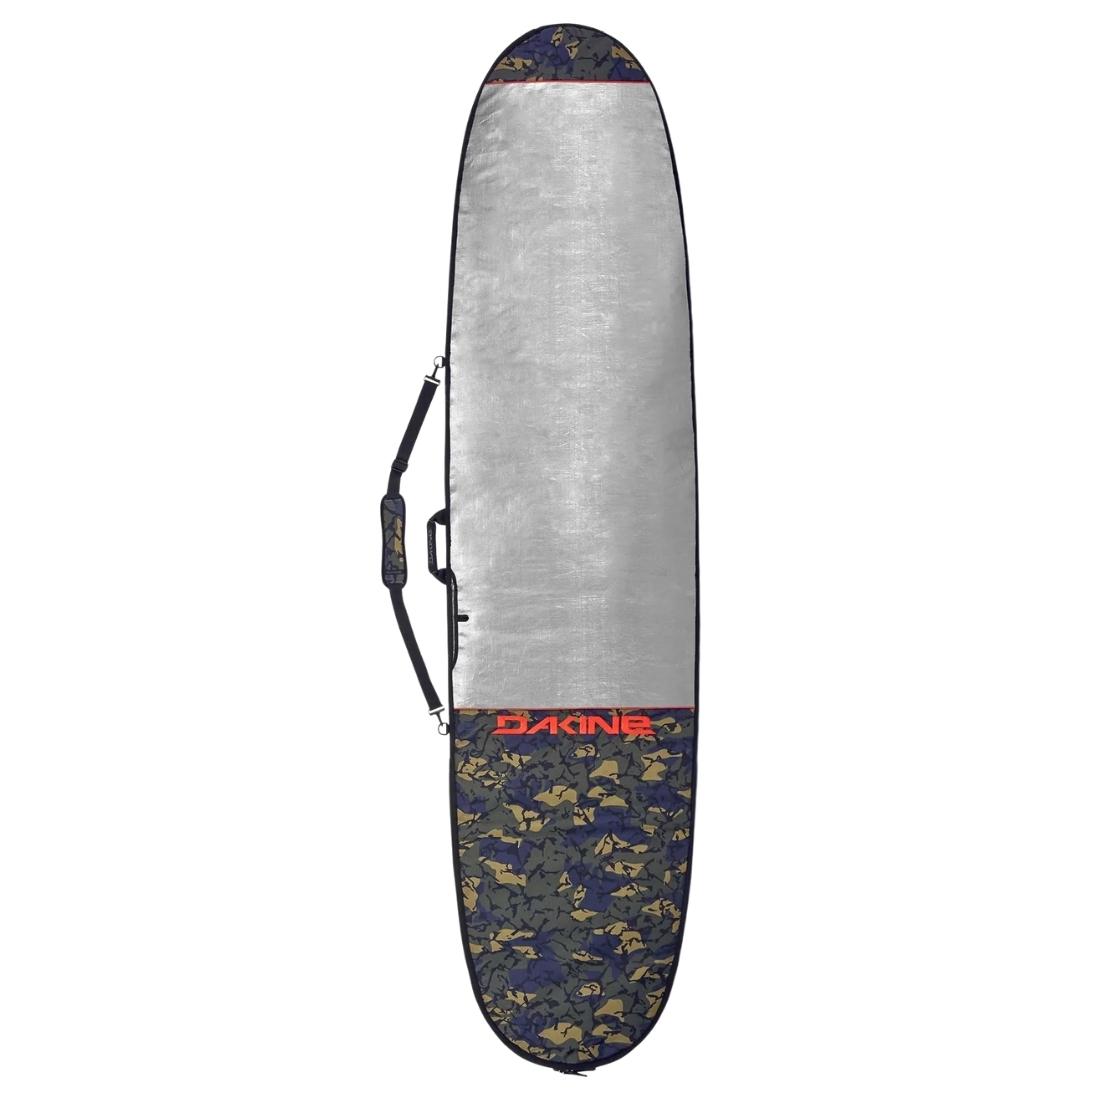 Dakine 9'2 Daylight Noserider Longboard Surfboard Bag - Cascade Camo - Surfboard Day Runner Bag/Cover by Dakine 9ft 2